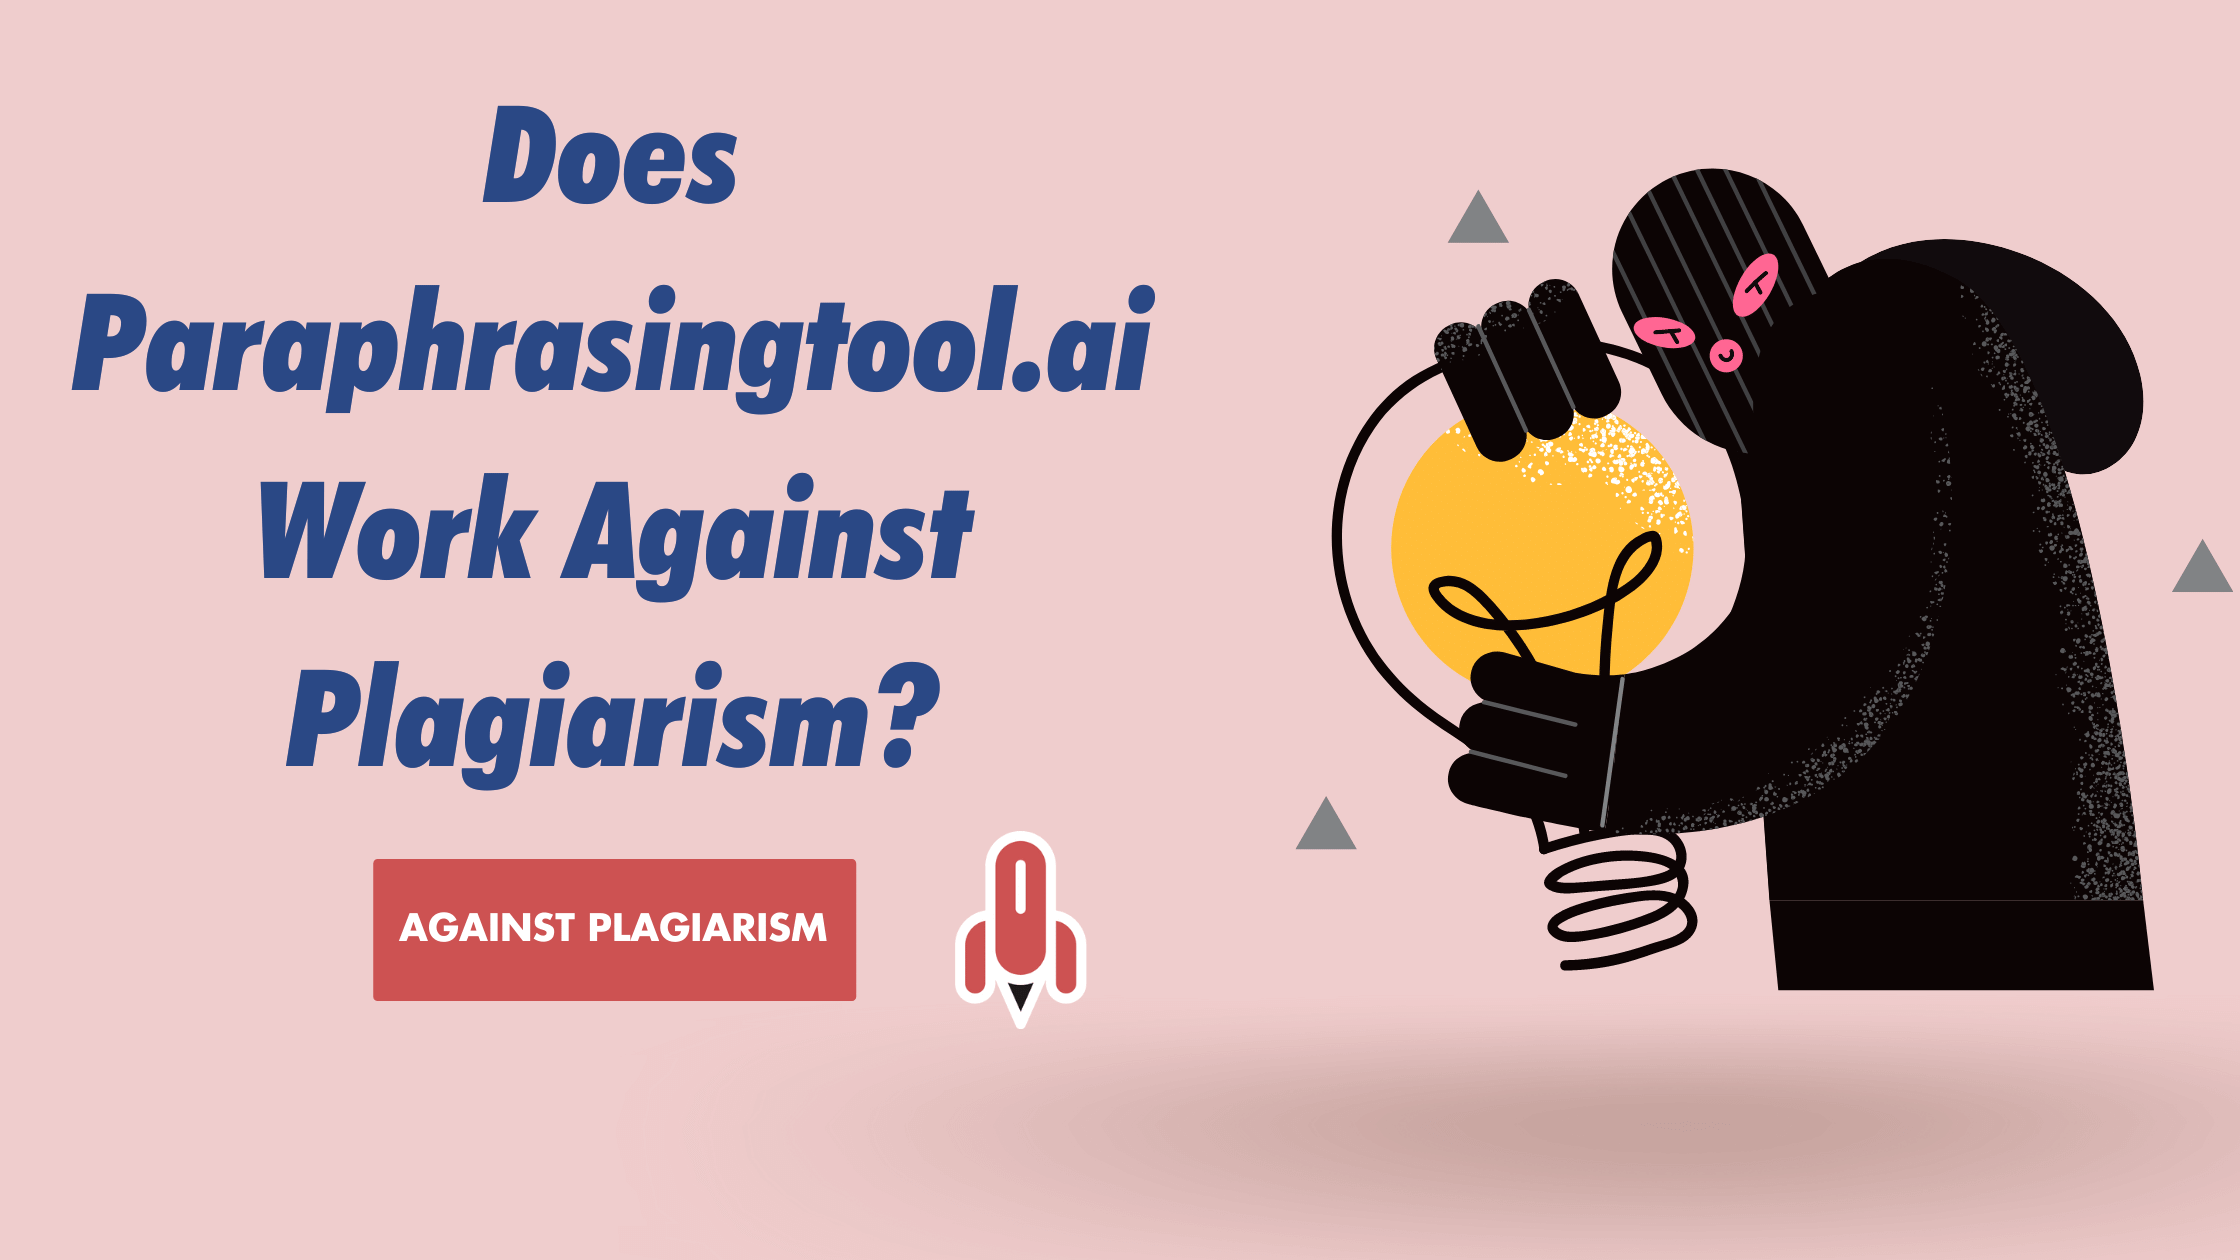 Does Paraphrasingtool.ai Work Against Plagiarism?